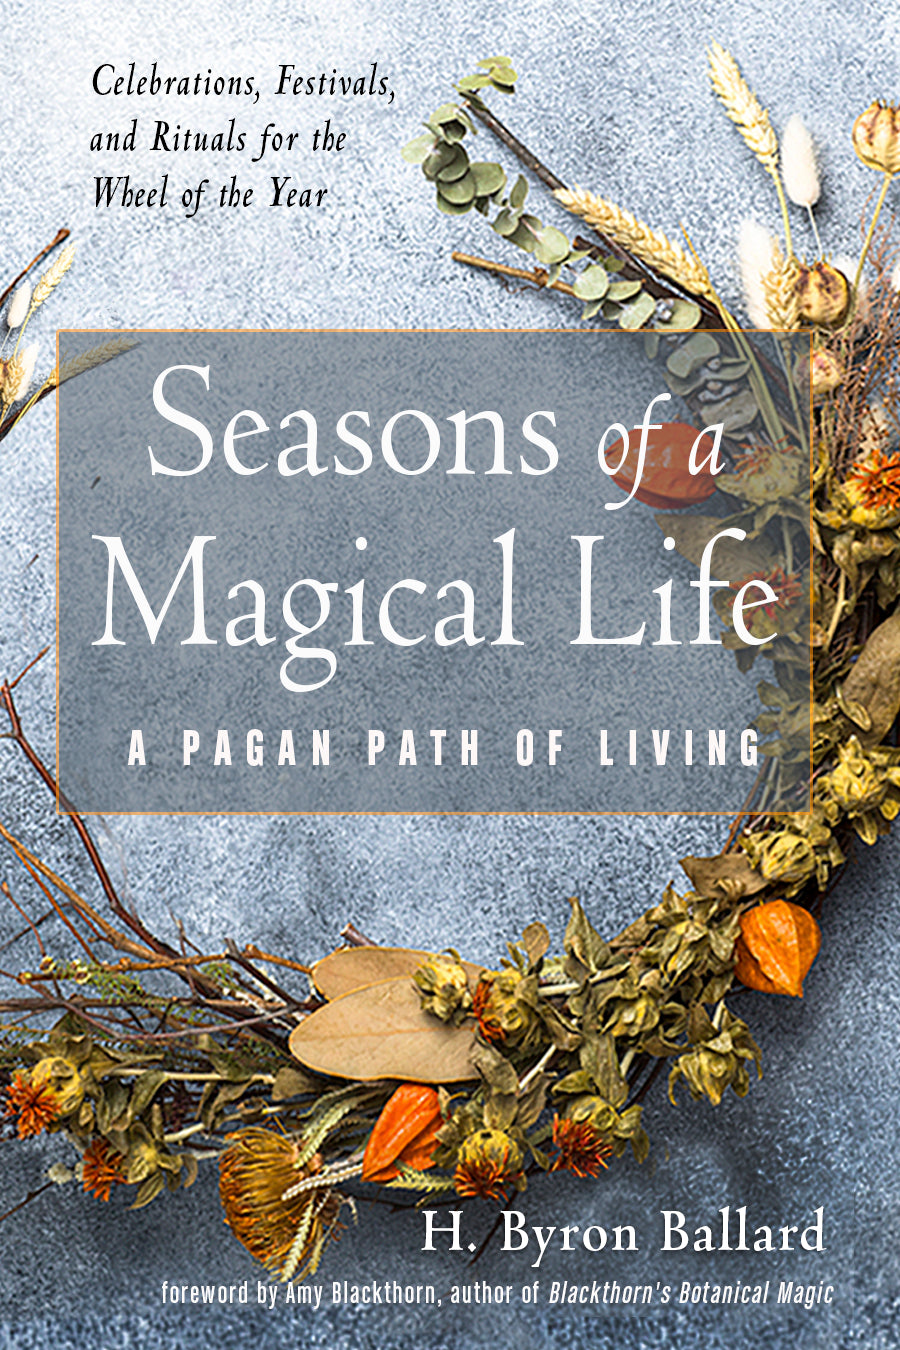 Seasons of a Magical Life by H. Byron Ballard